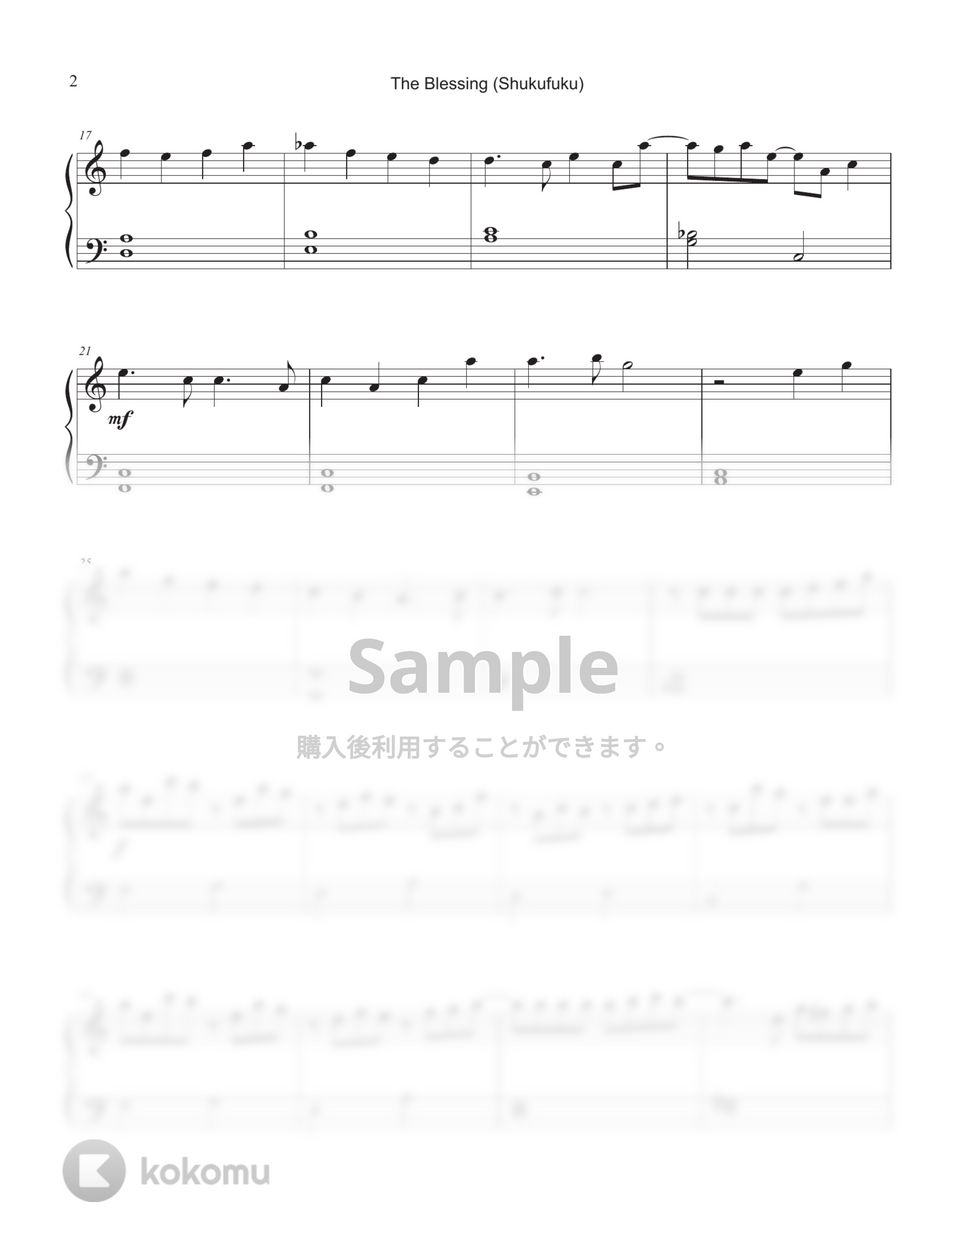 YOASOBI - The Blessing (Shukufuku)「祝福」 (Easy) by Tully Piano